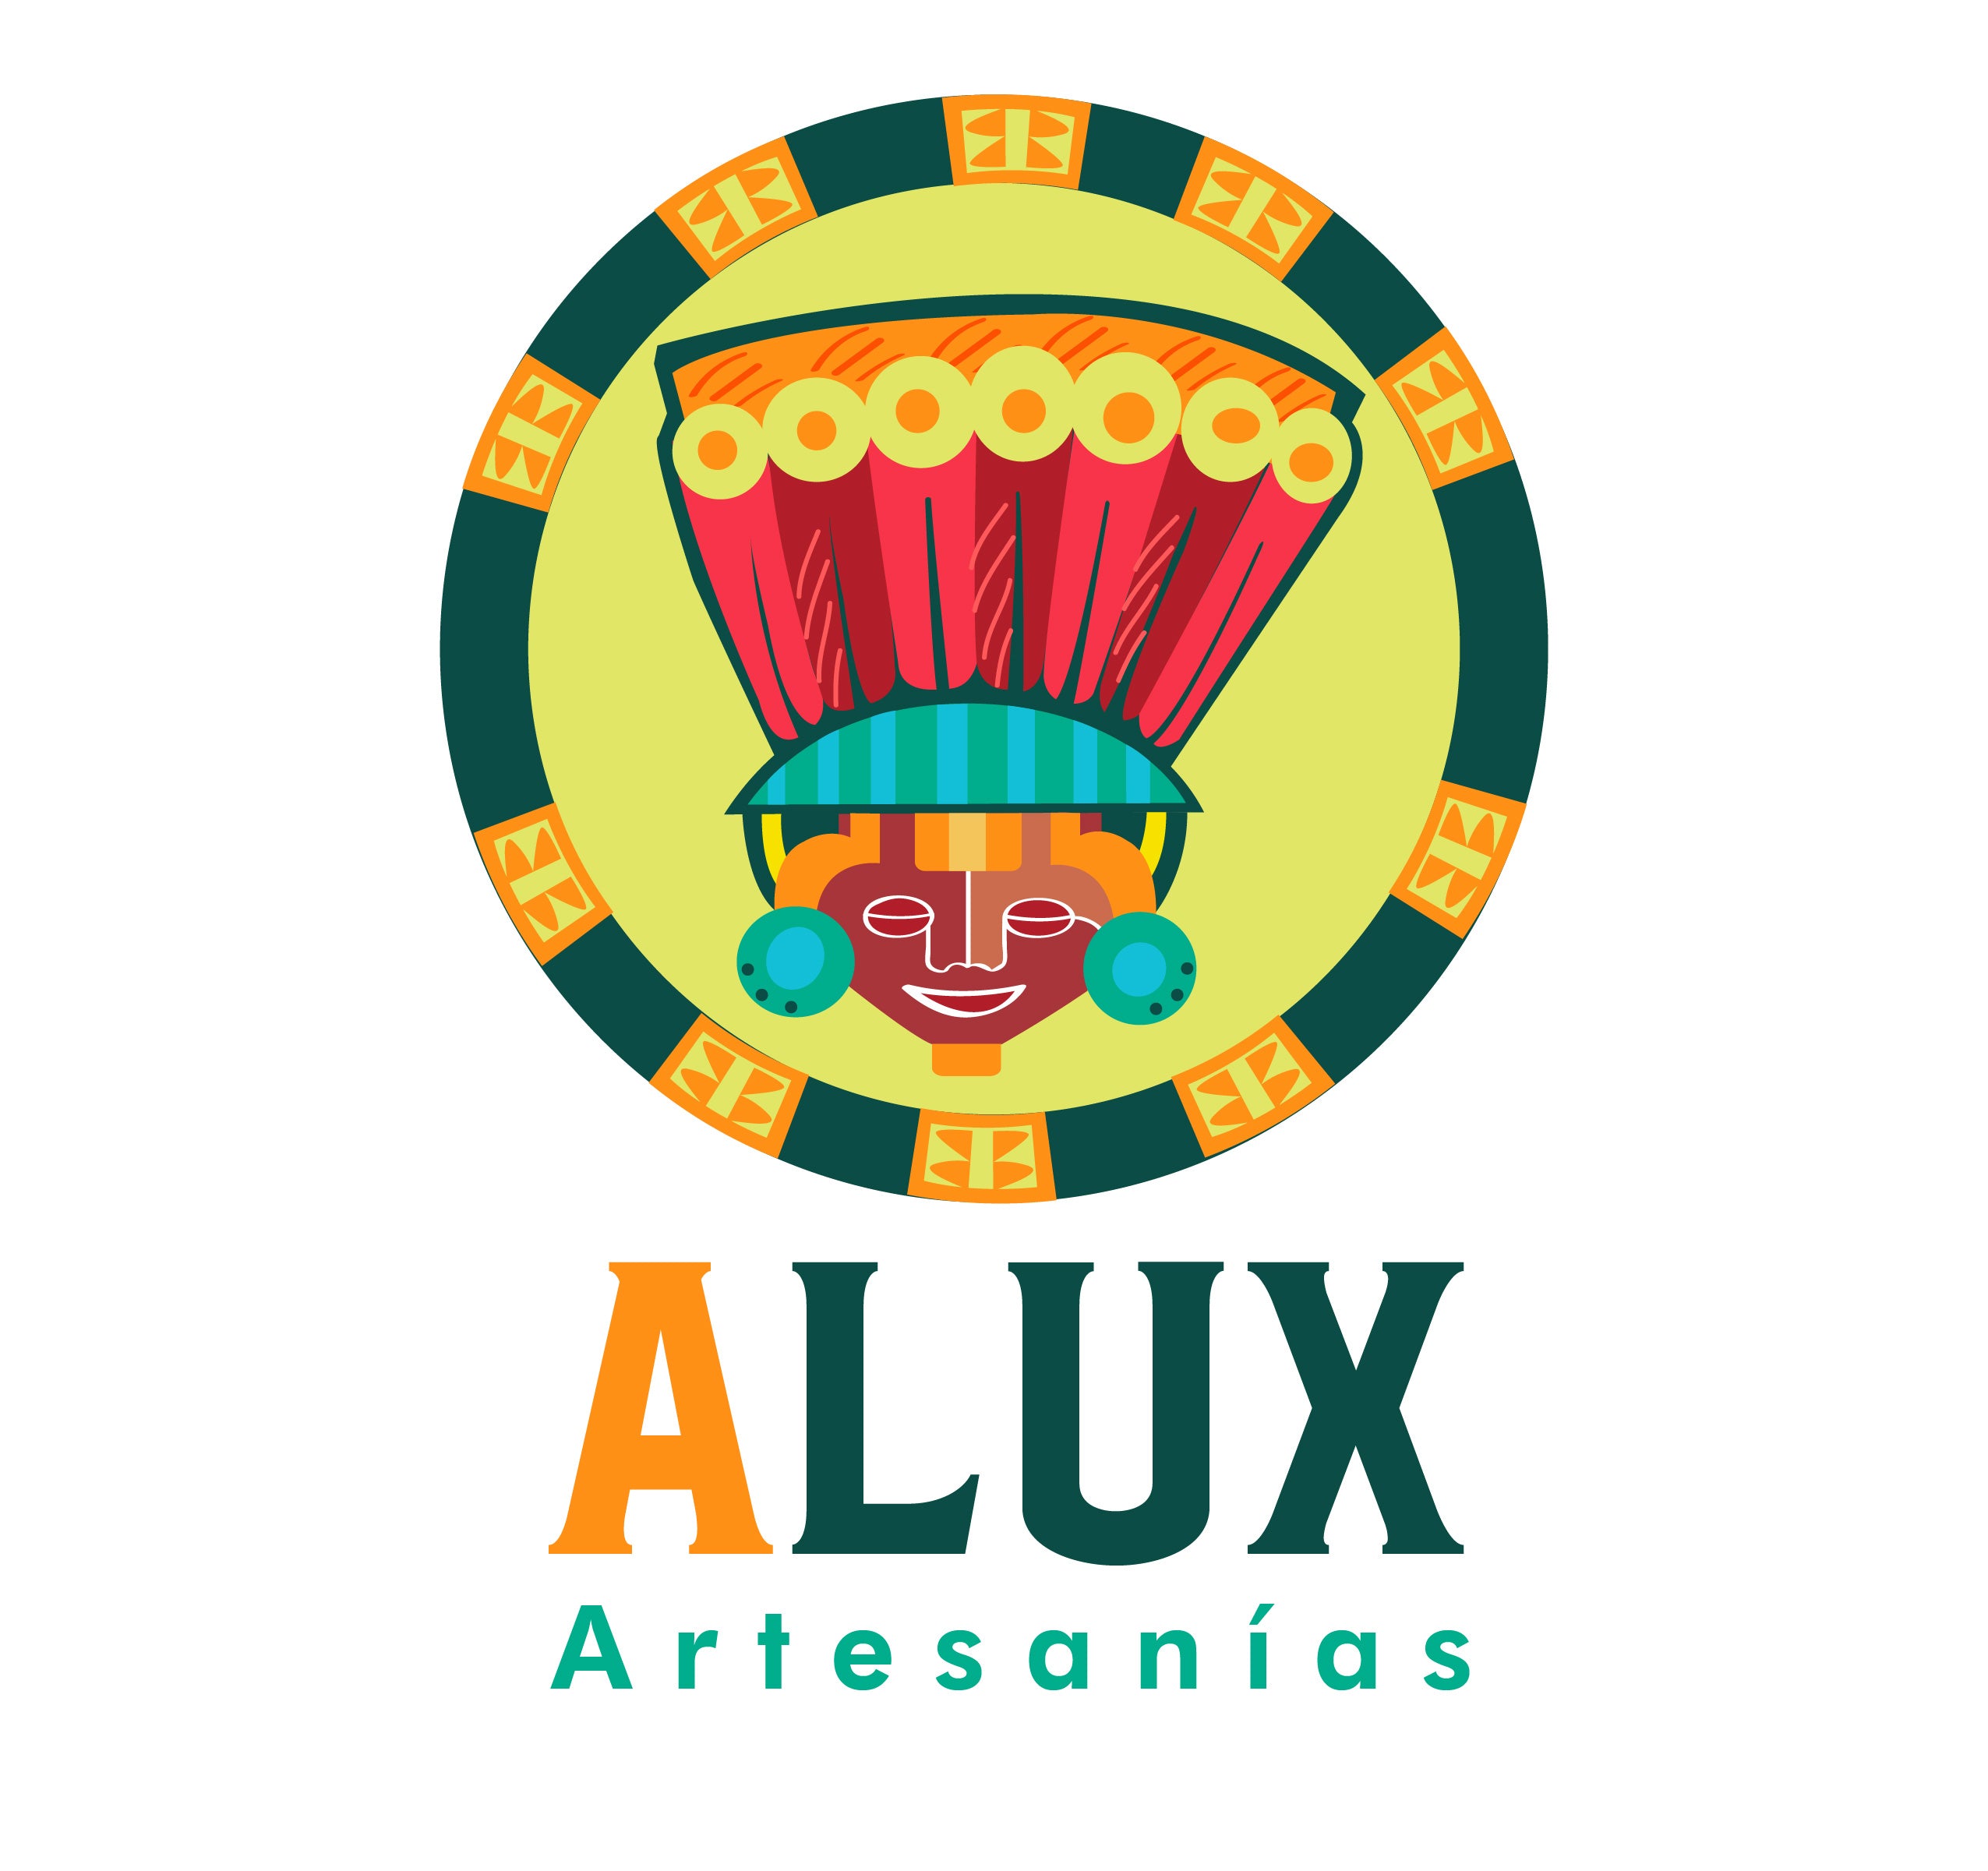 Artesanias Alux